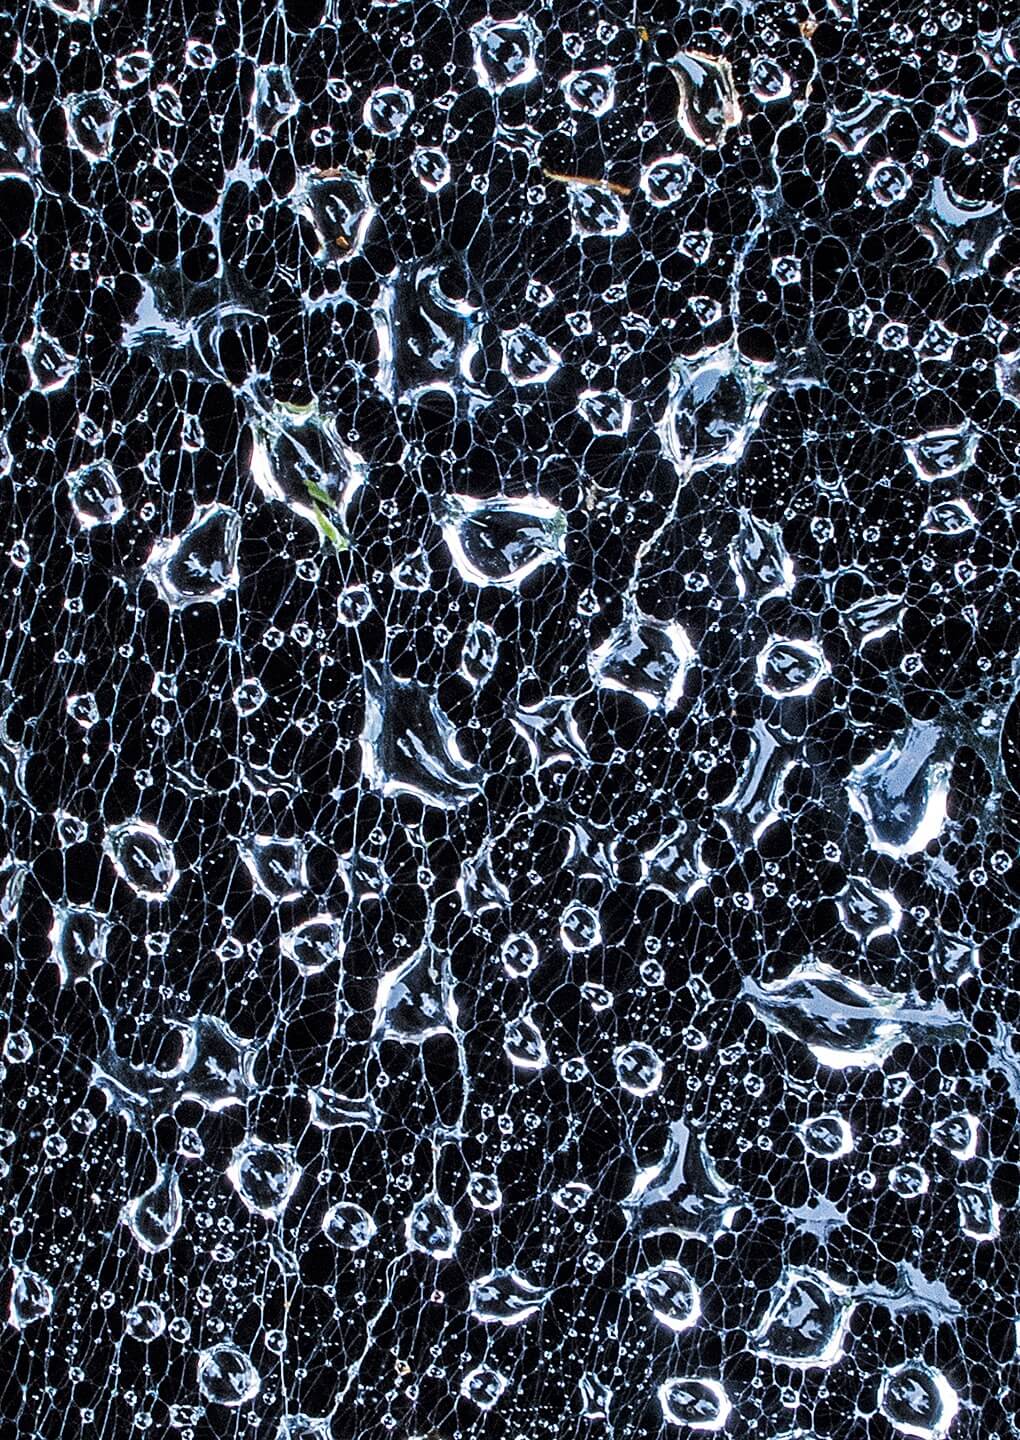 Warren Krupsaw - Water Droplets on Spider Web